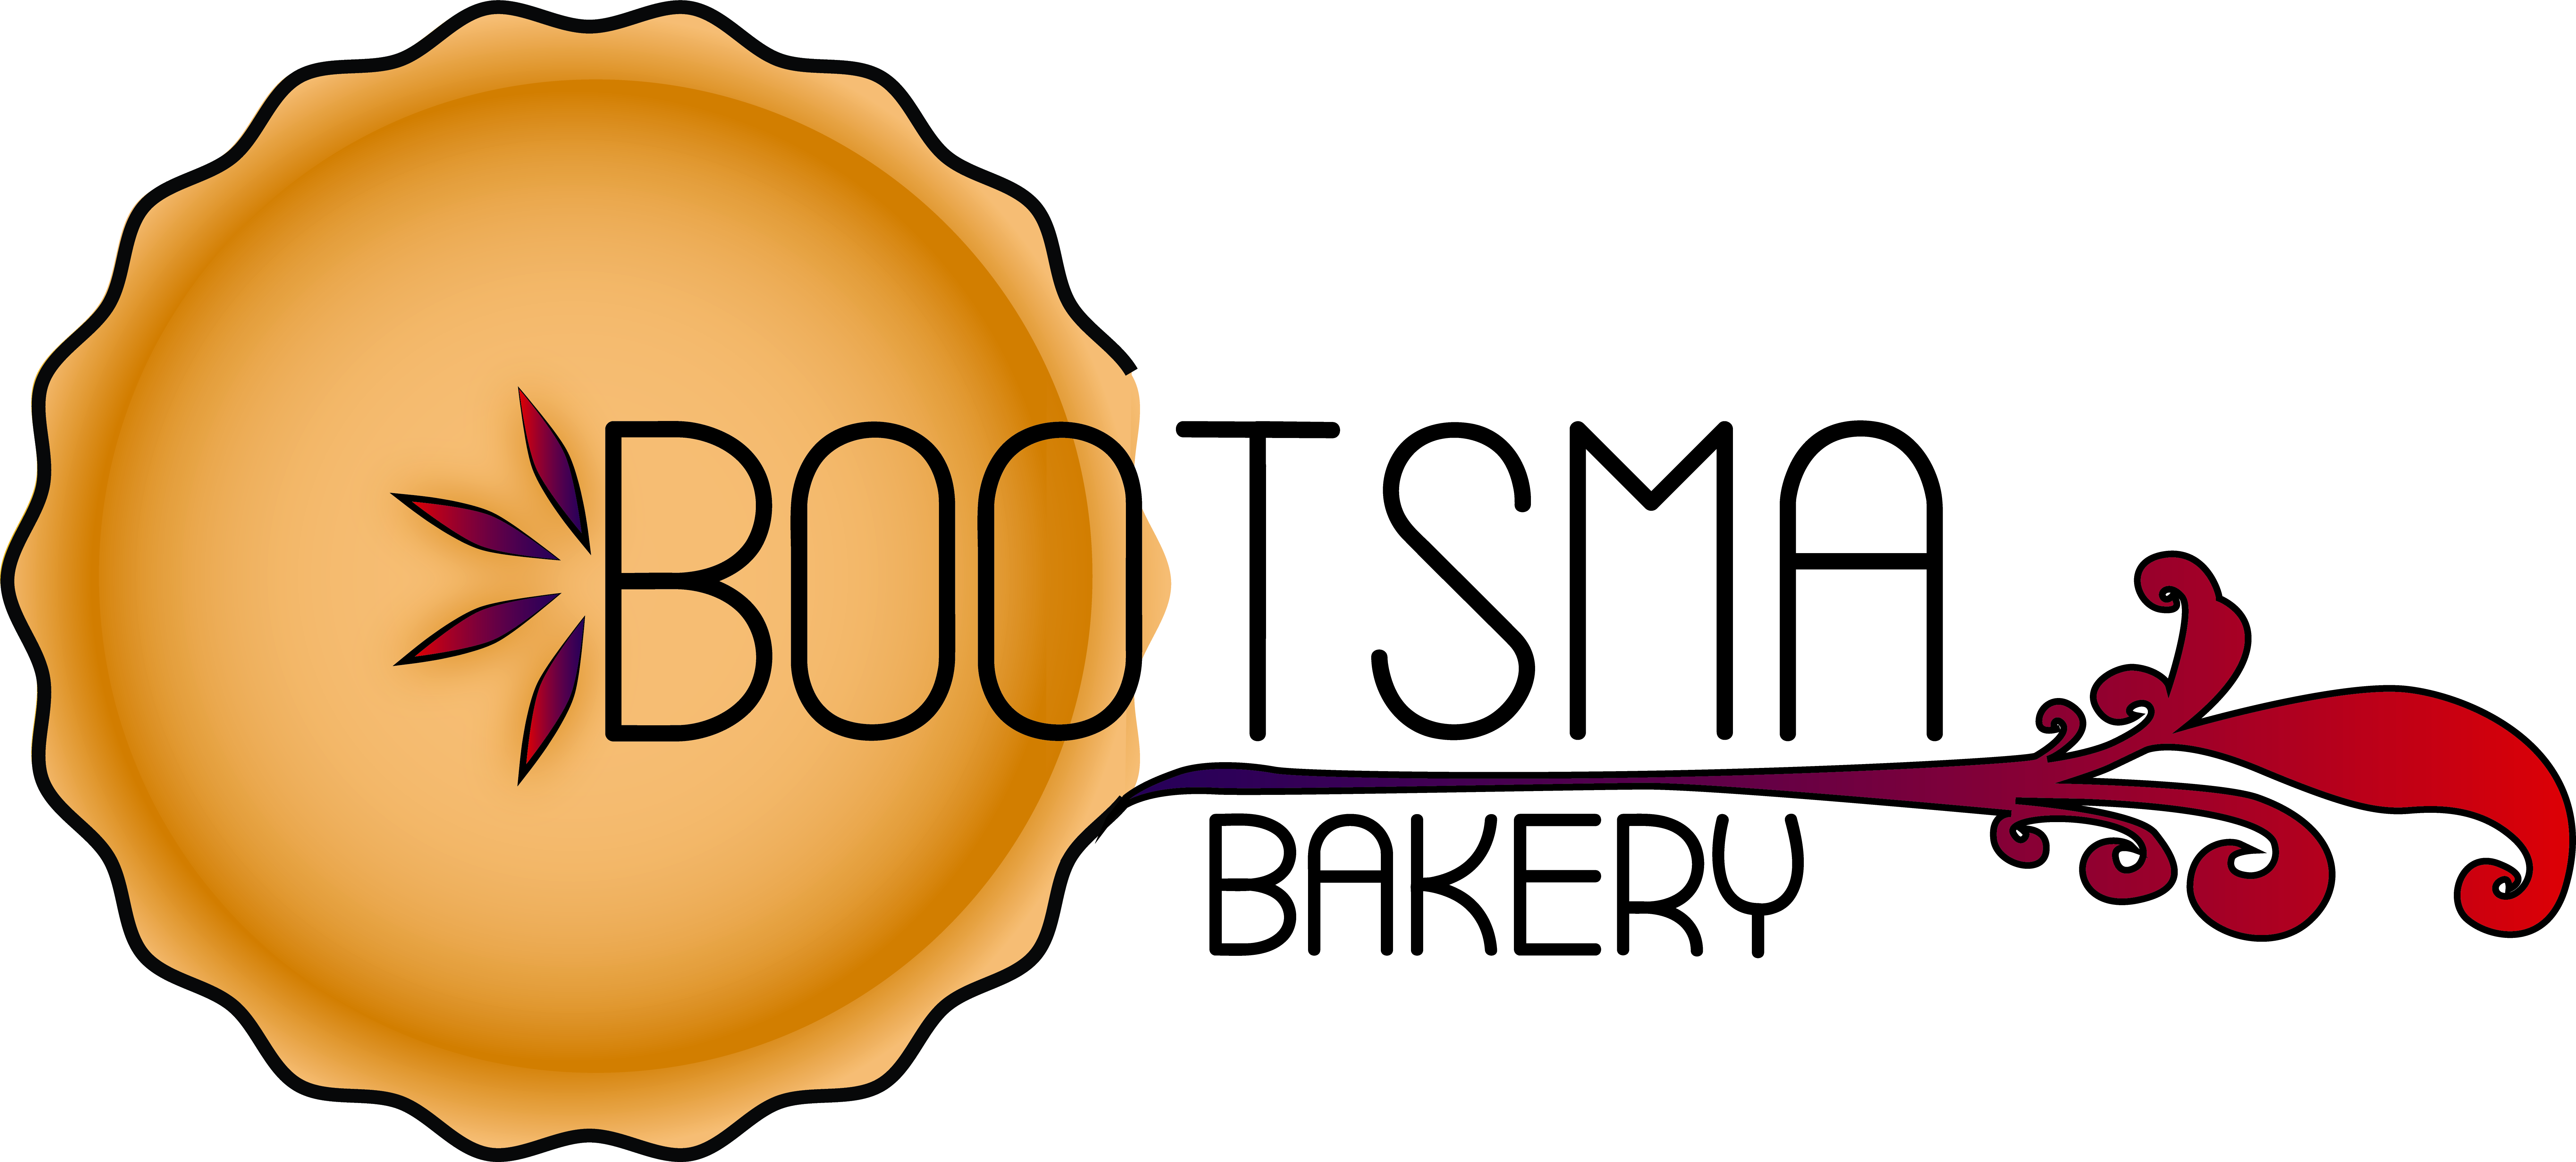 Bootsma Bakery